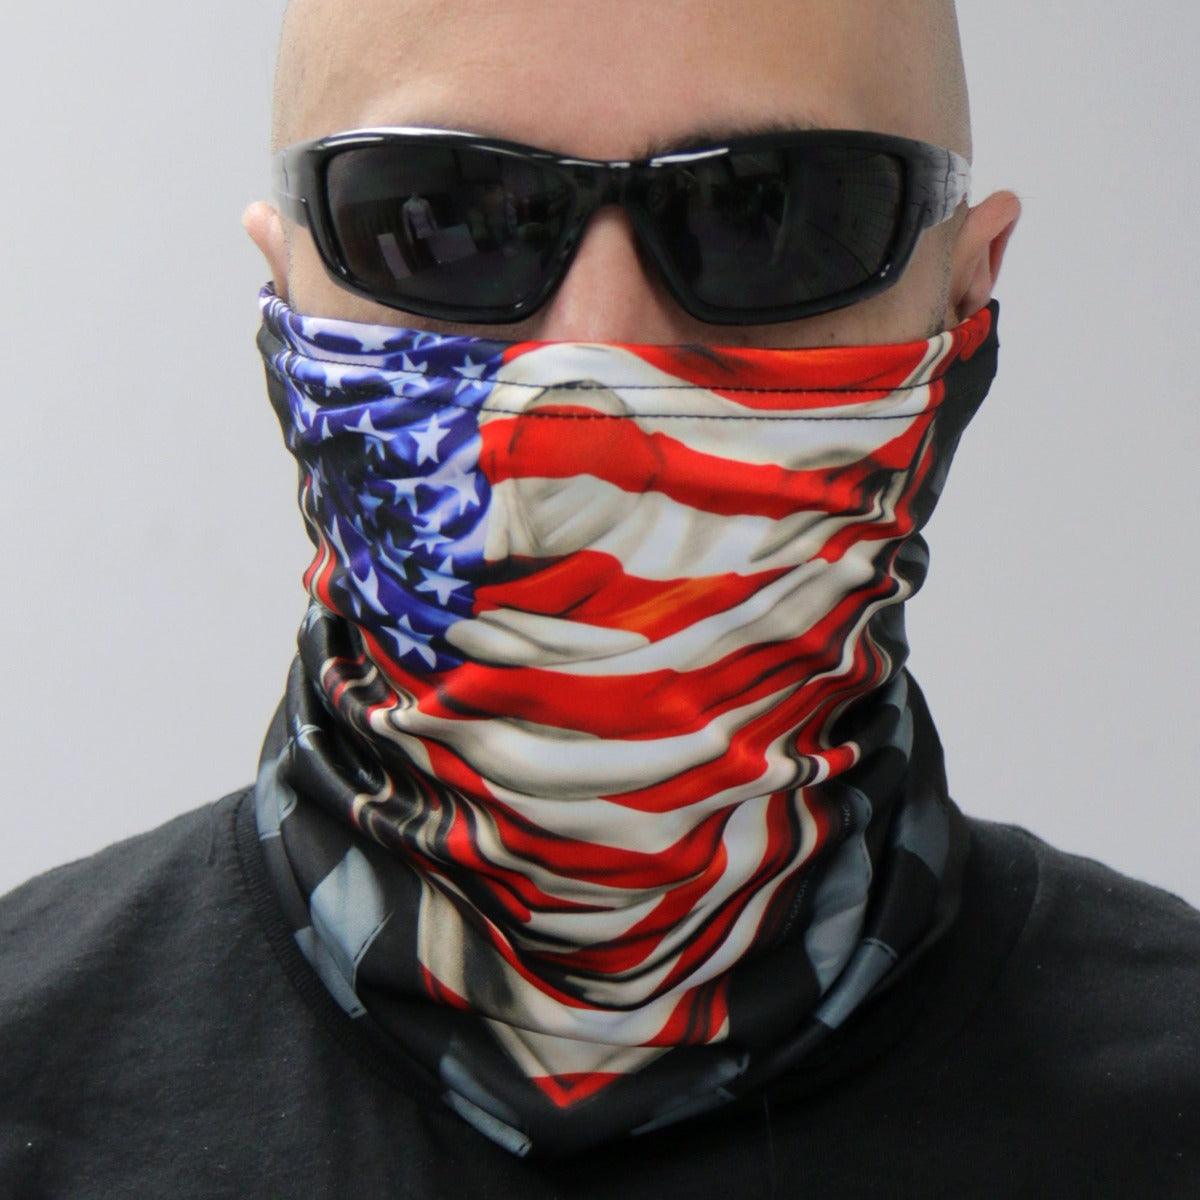 Hot Leathers America Rising Neck Gaiter Mask - American Legend Rider